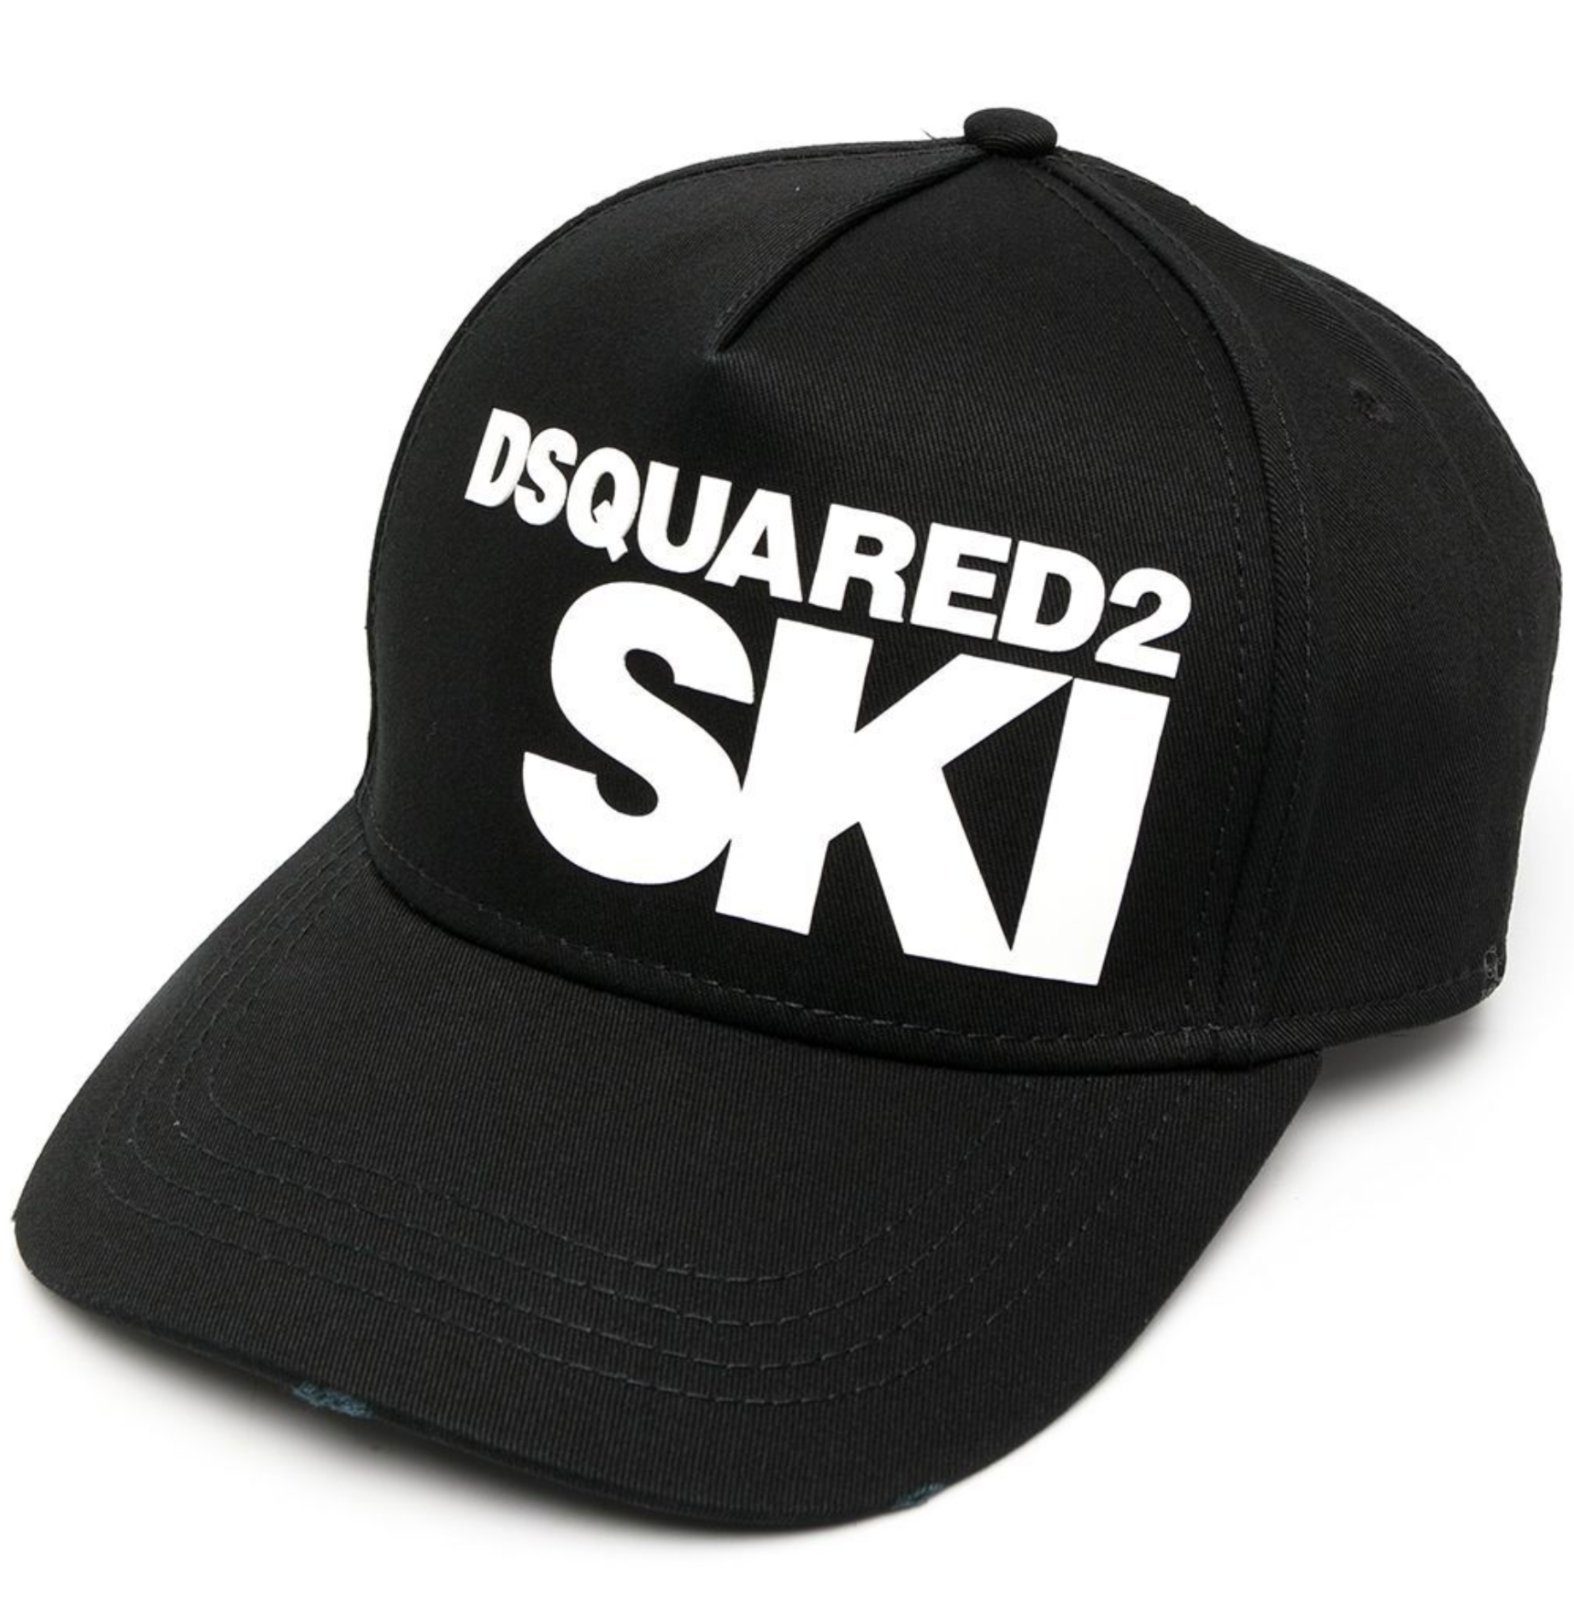 Baseball Dsquared2-224-SKI-Schwarz Dsquared2 Cap